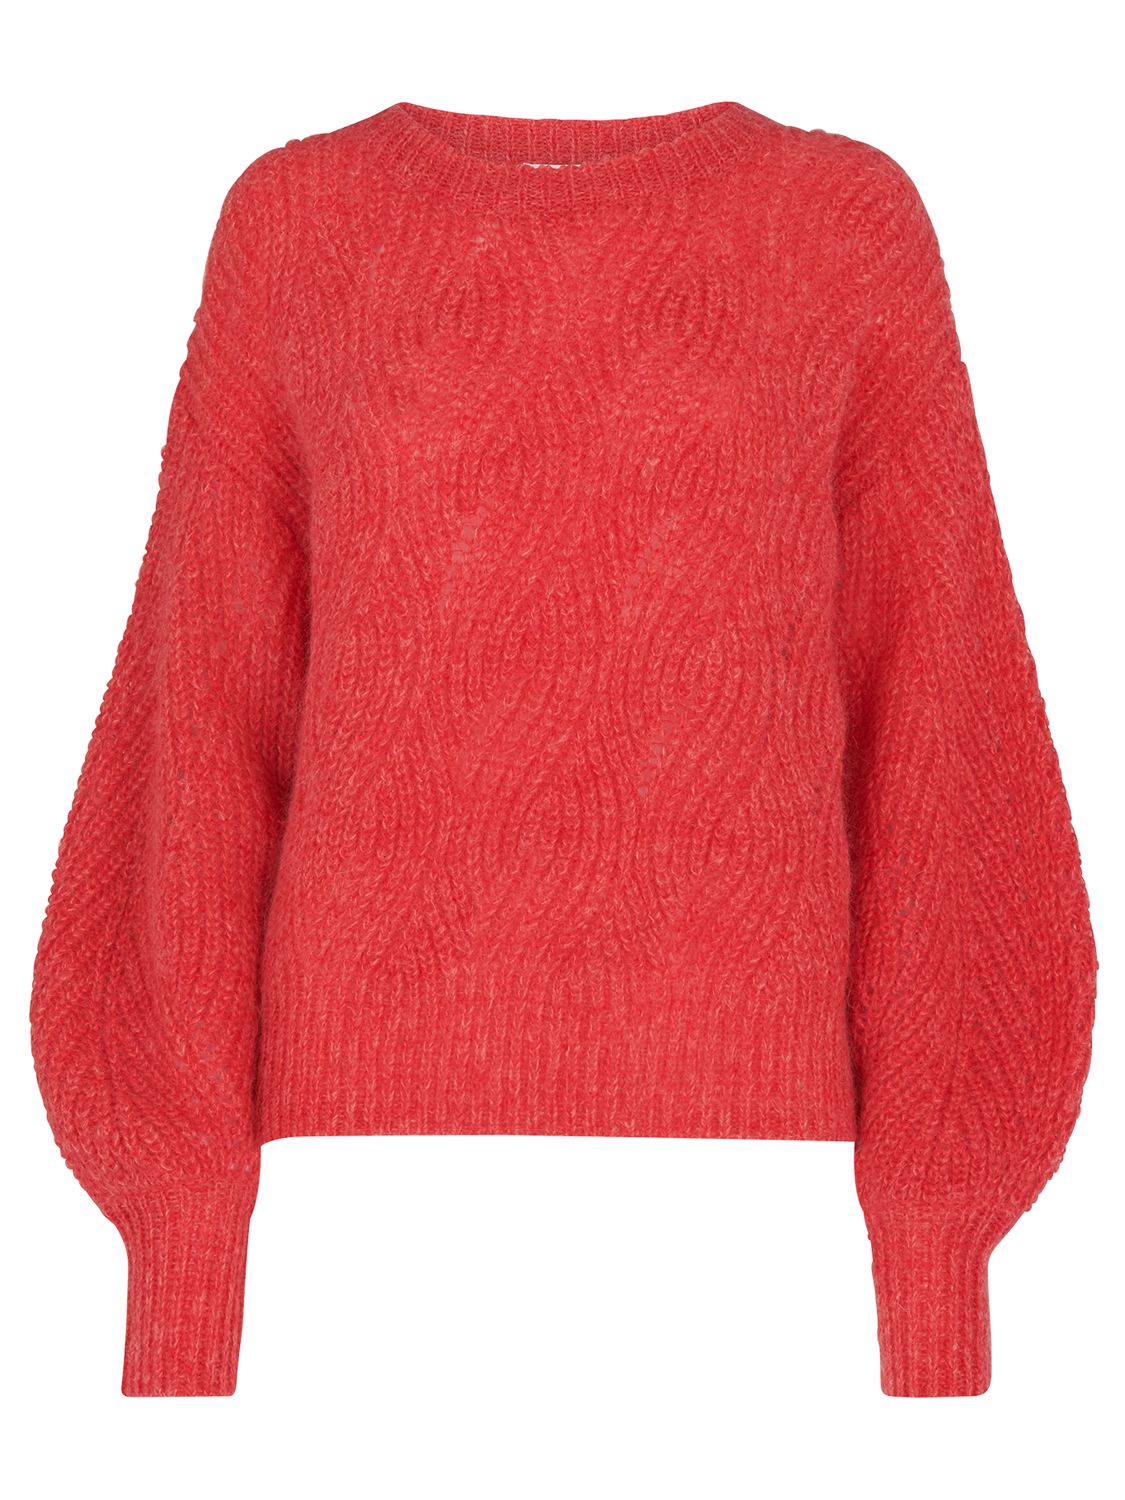 Whistles Sophia Mohair Sweater, Red